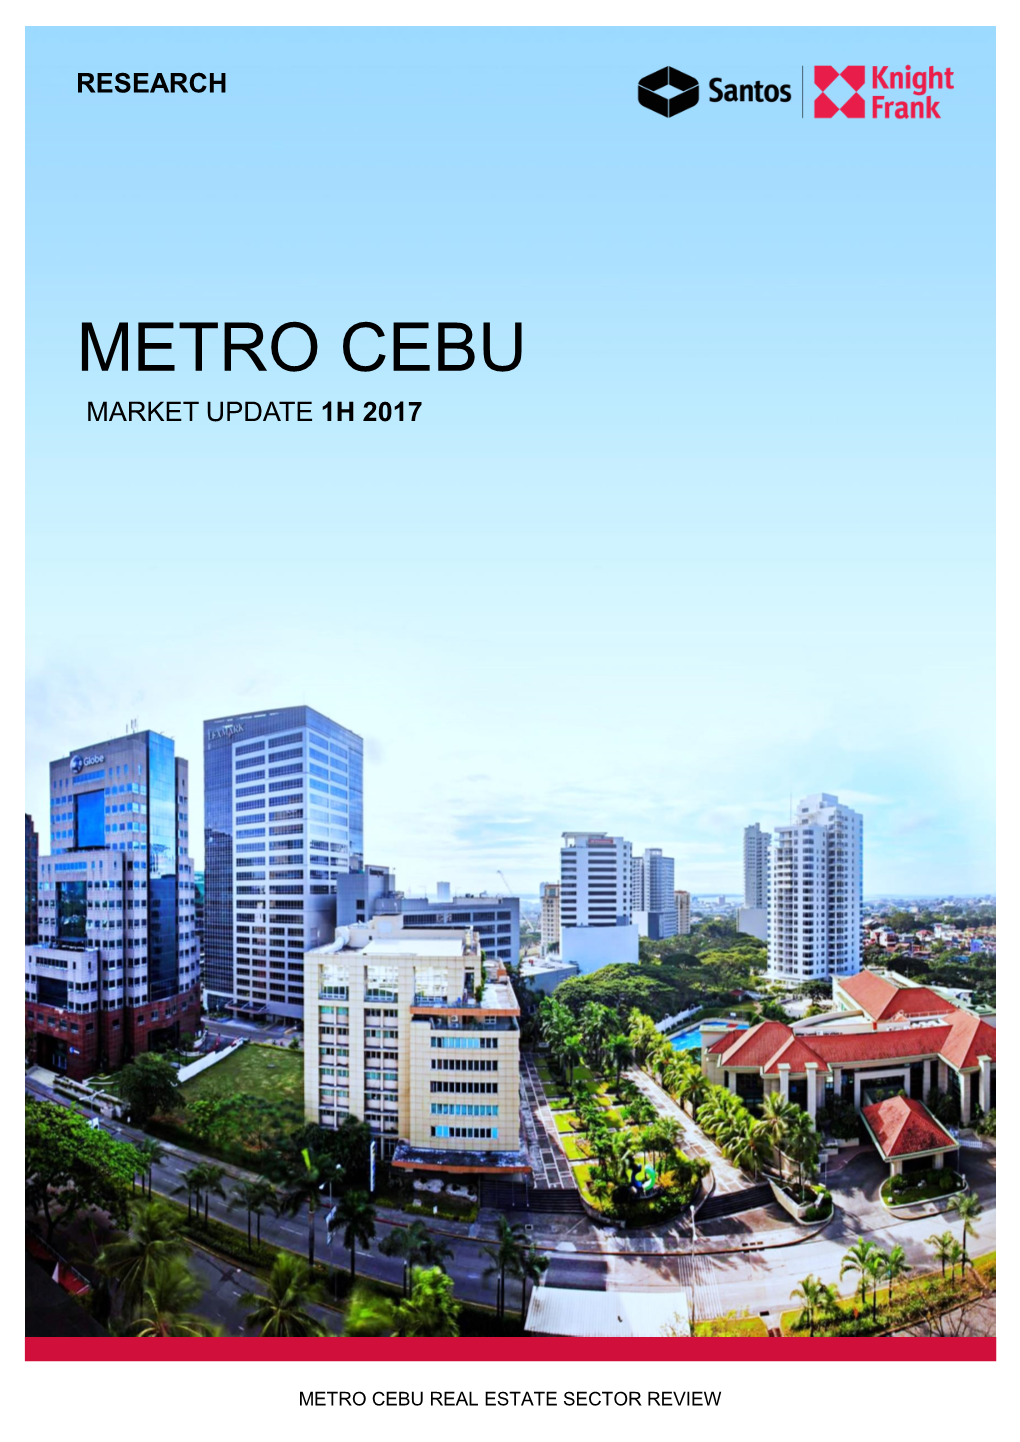 Metro Cebu Market Update 1H 2017